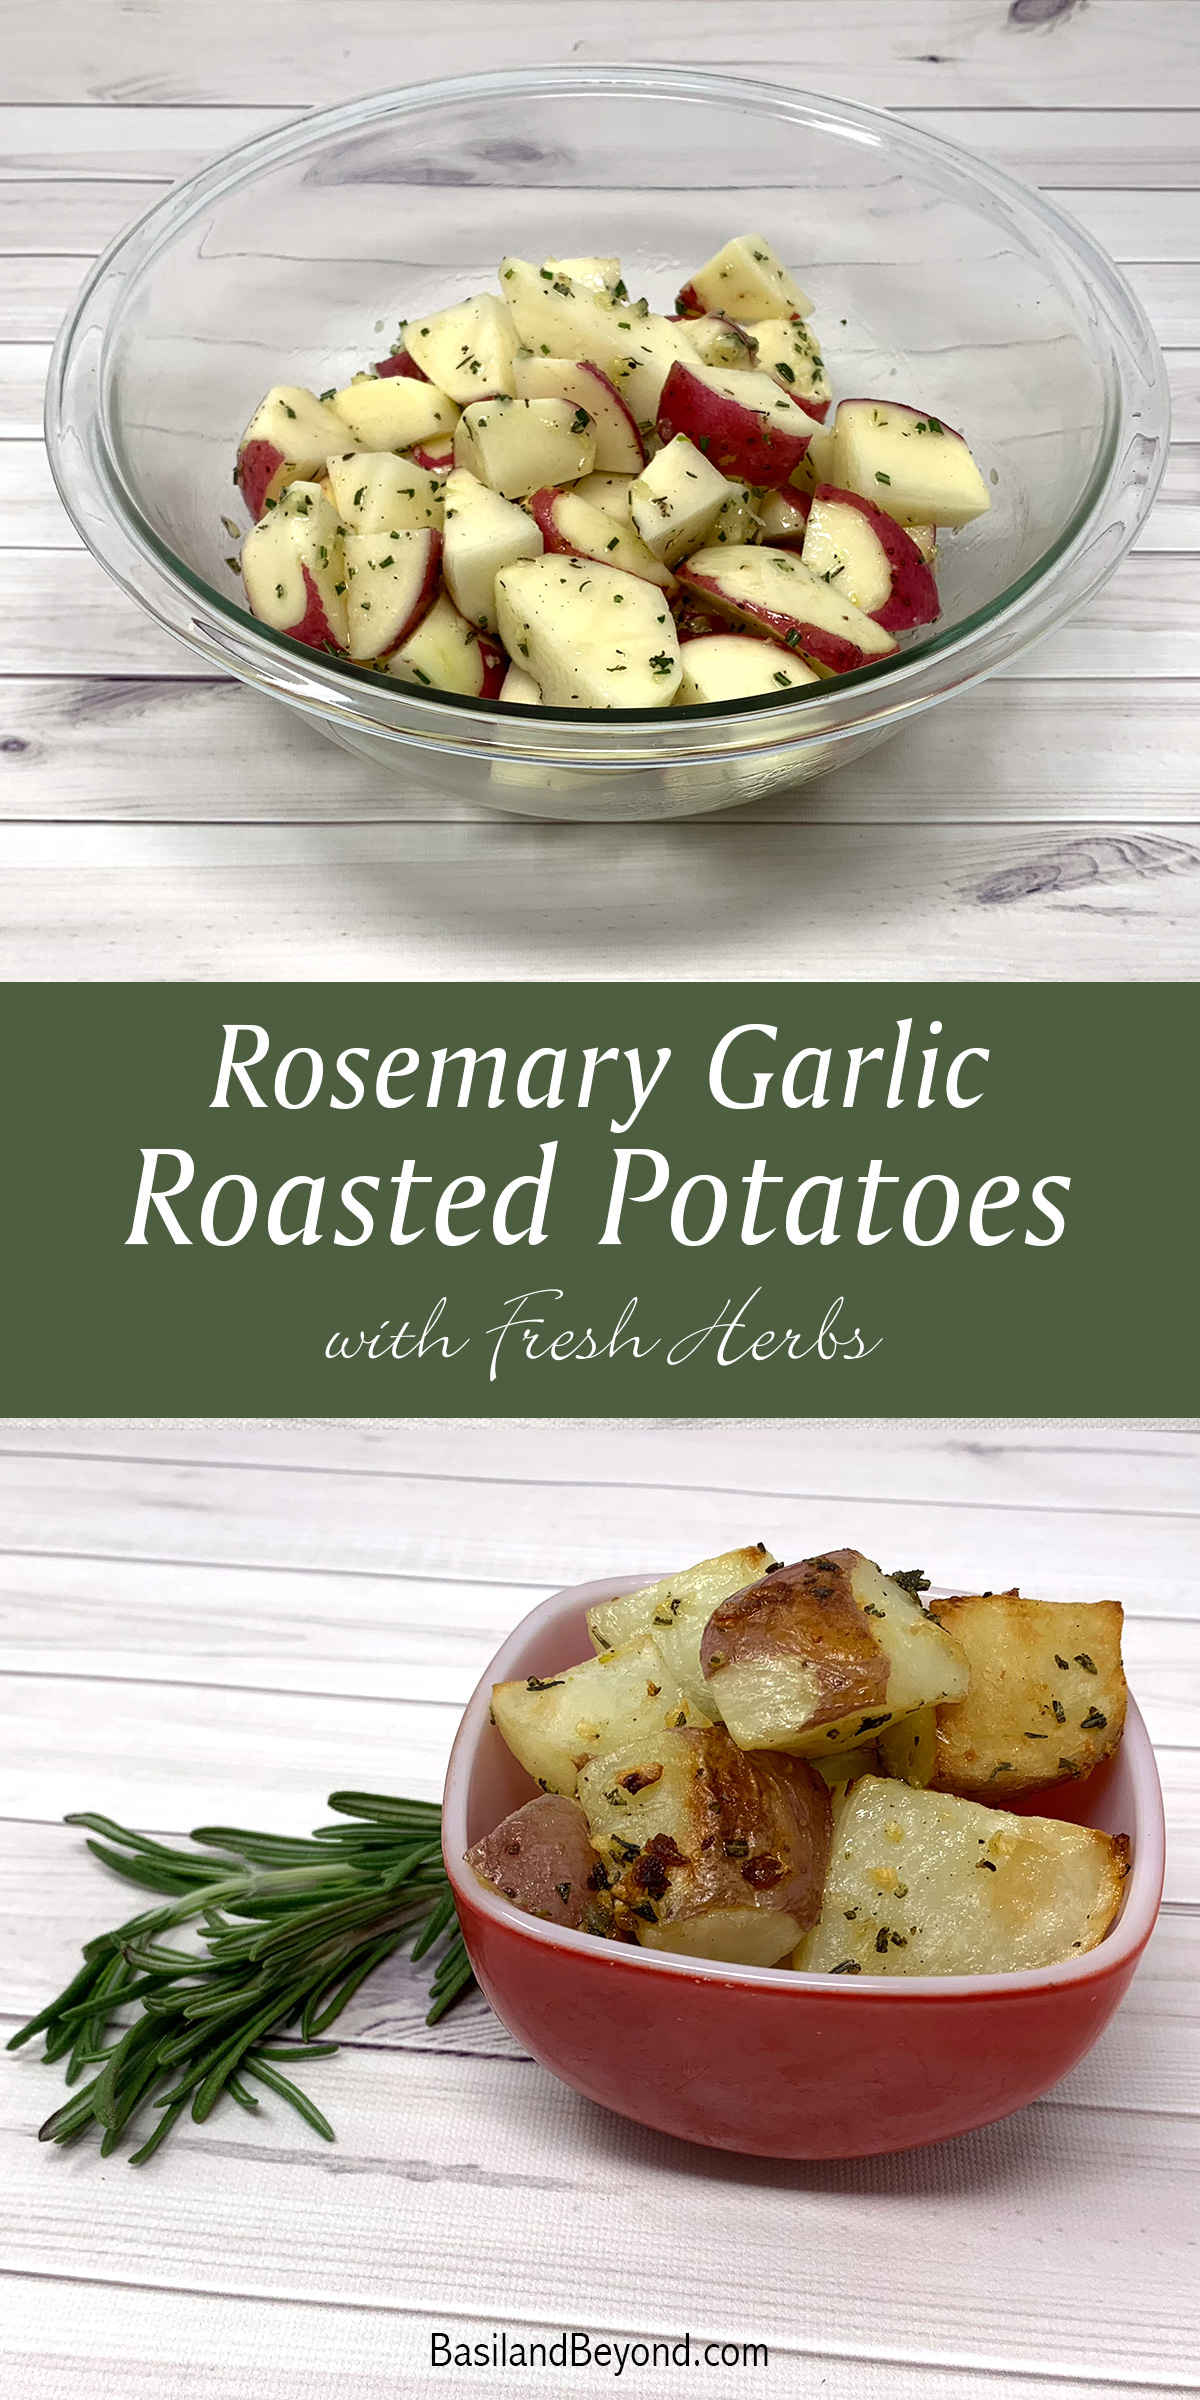 Rosemary Garlic Roasted Potatoes